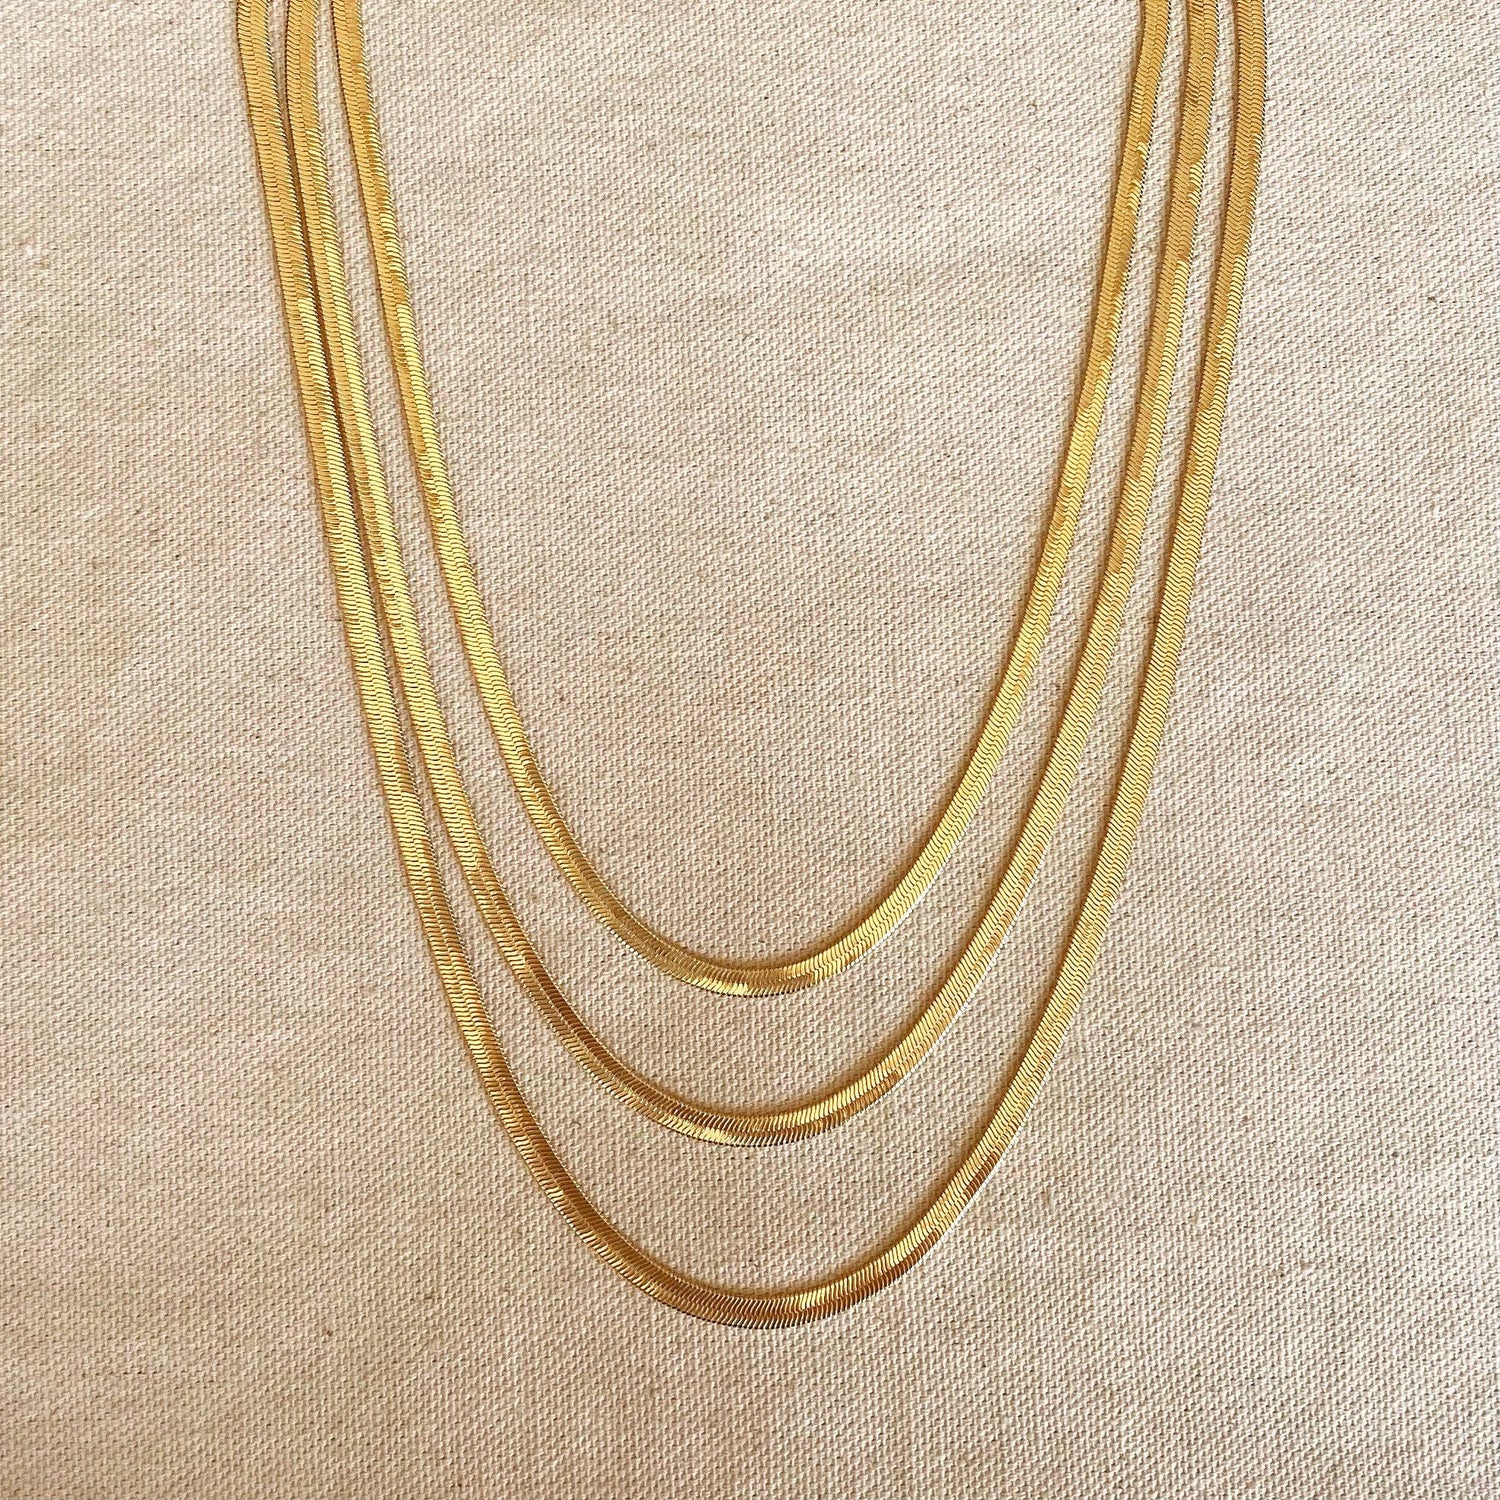 18k Gold Filled 4.0mm Thickness Herringbone Chain: 14 inches choker